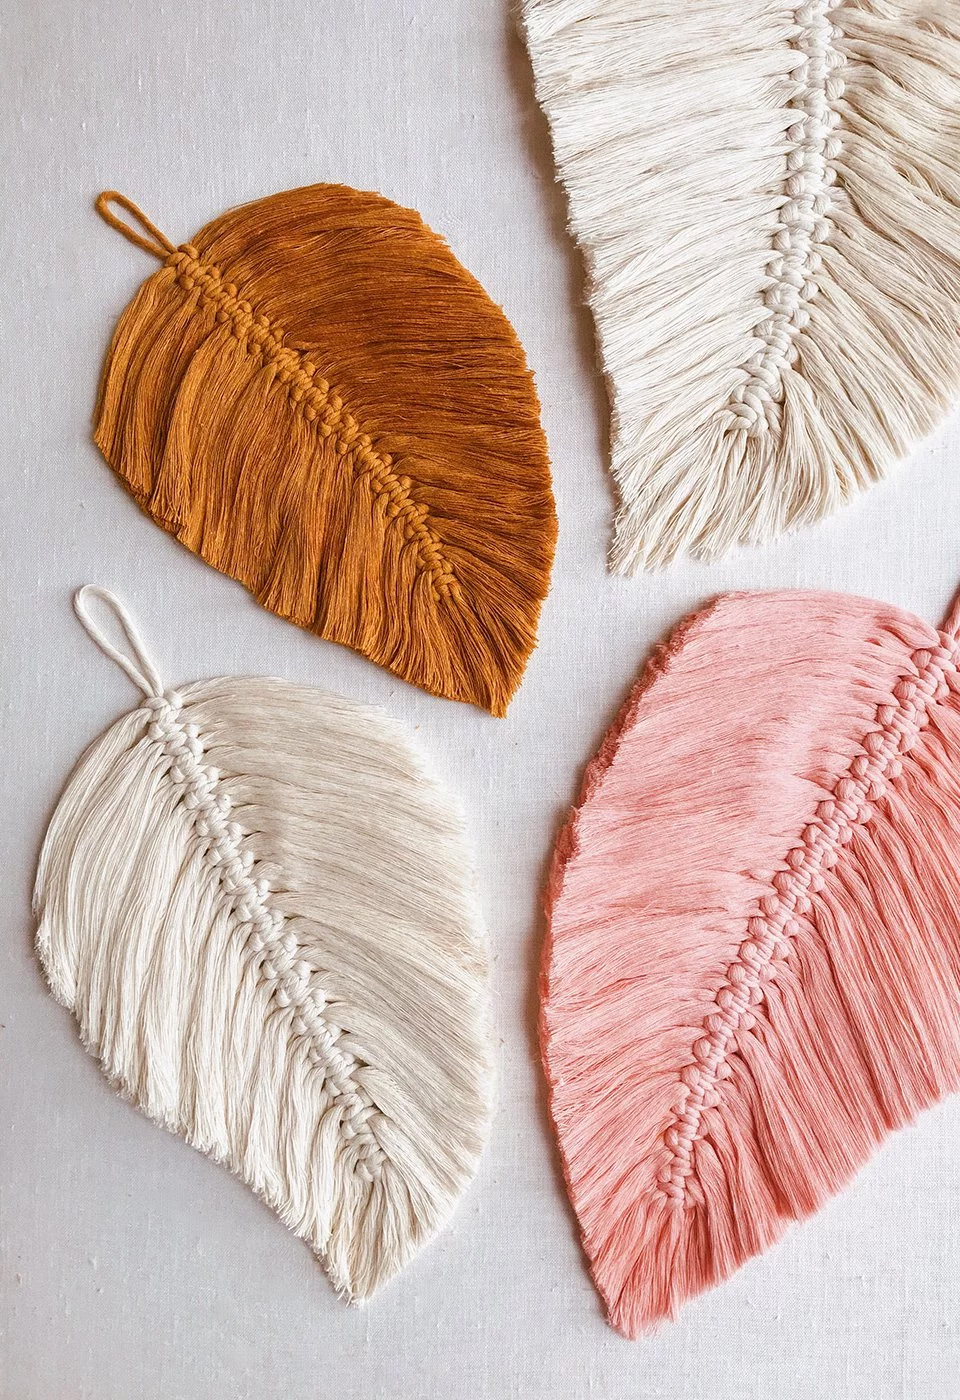 DIY Macrame Feathers